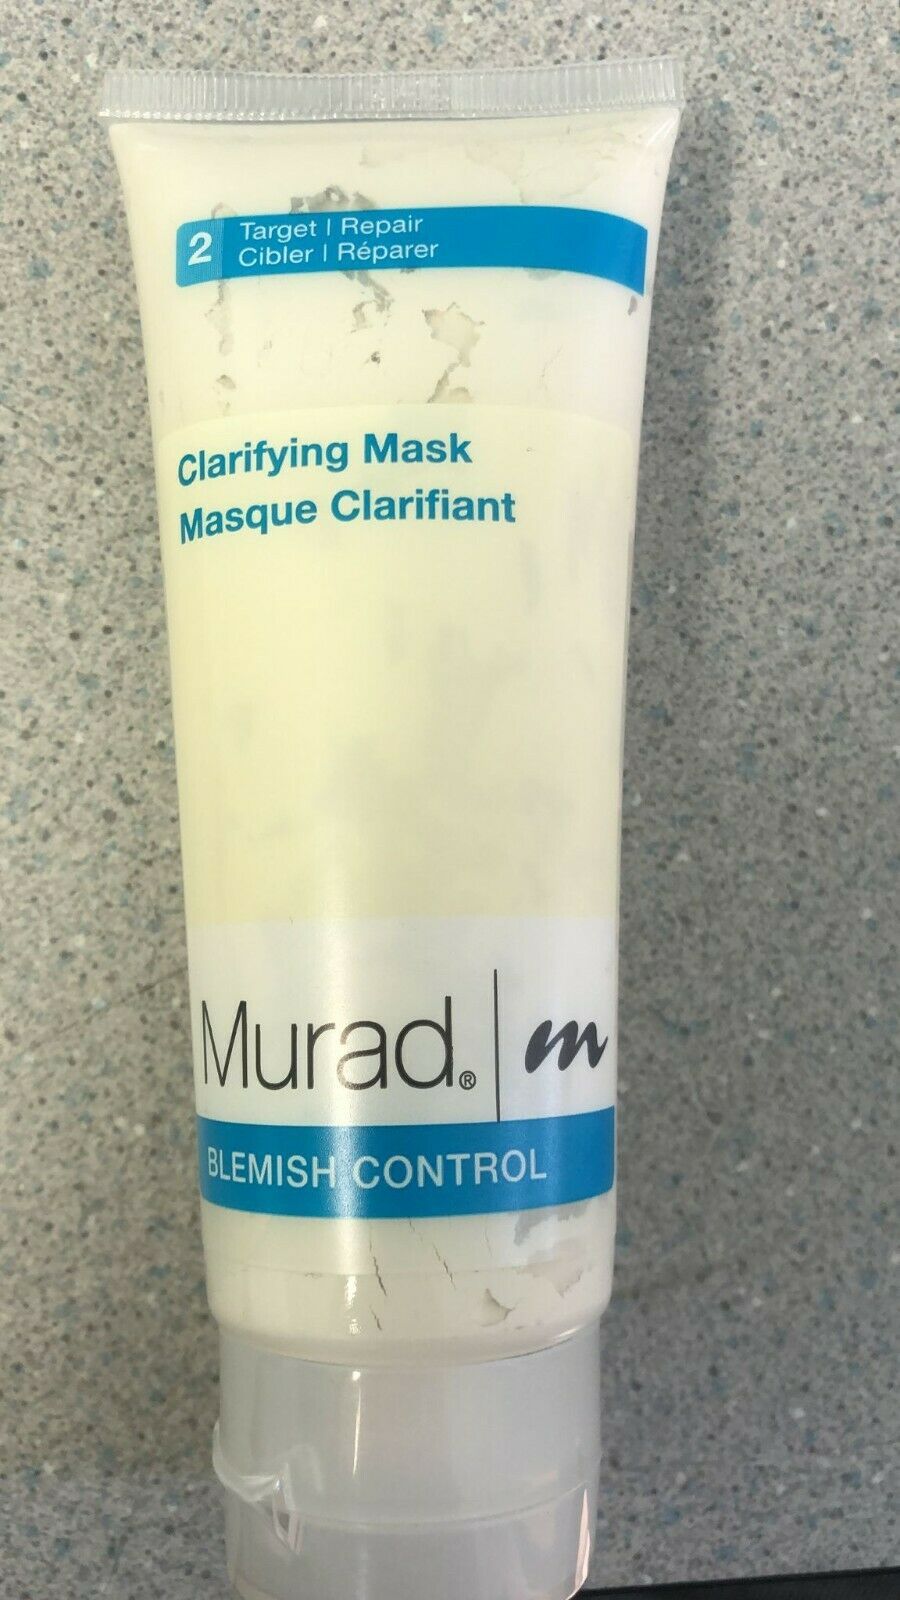 Murad - Clarifying Mask (2.65oz / 75 g) no box sealed - $18.80